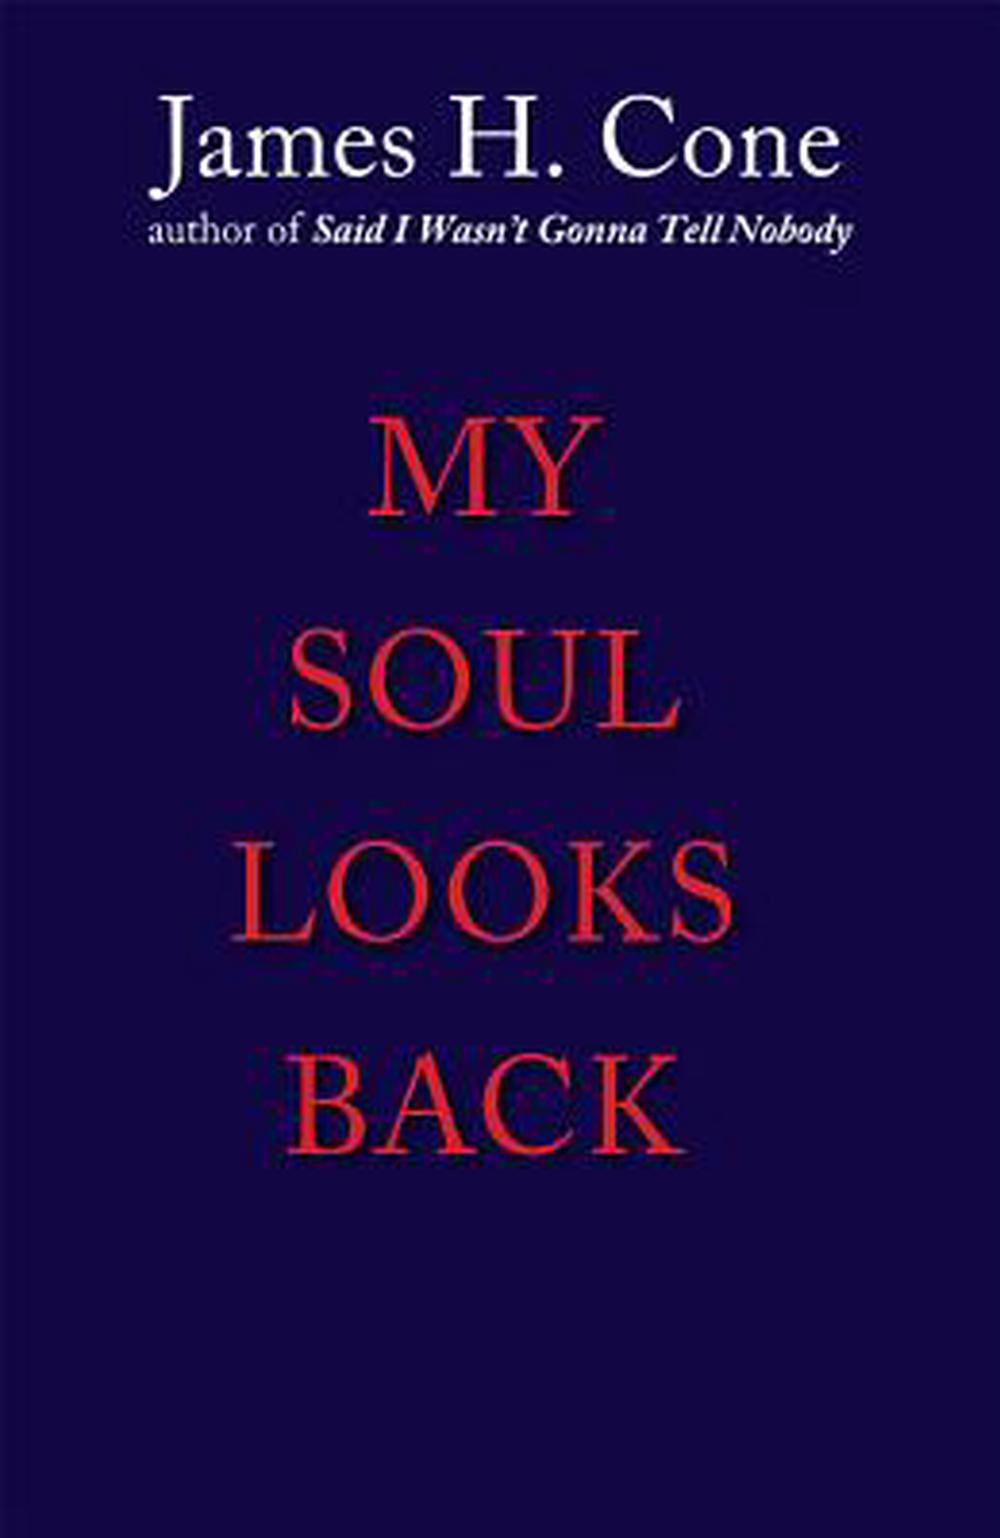 My Soul Looks Back by Jessica B. Harris